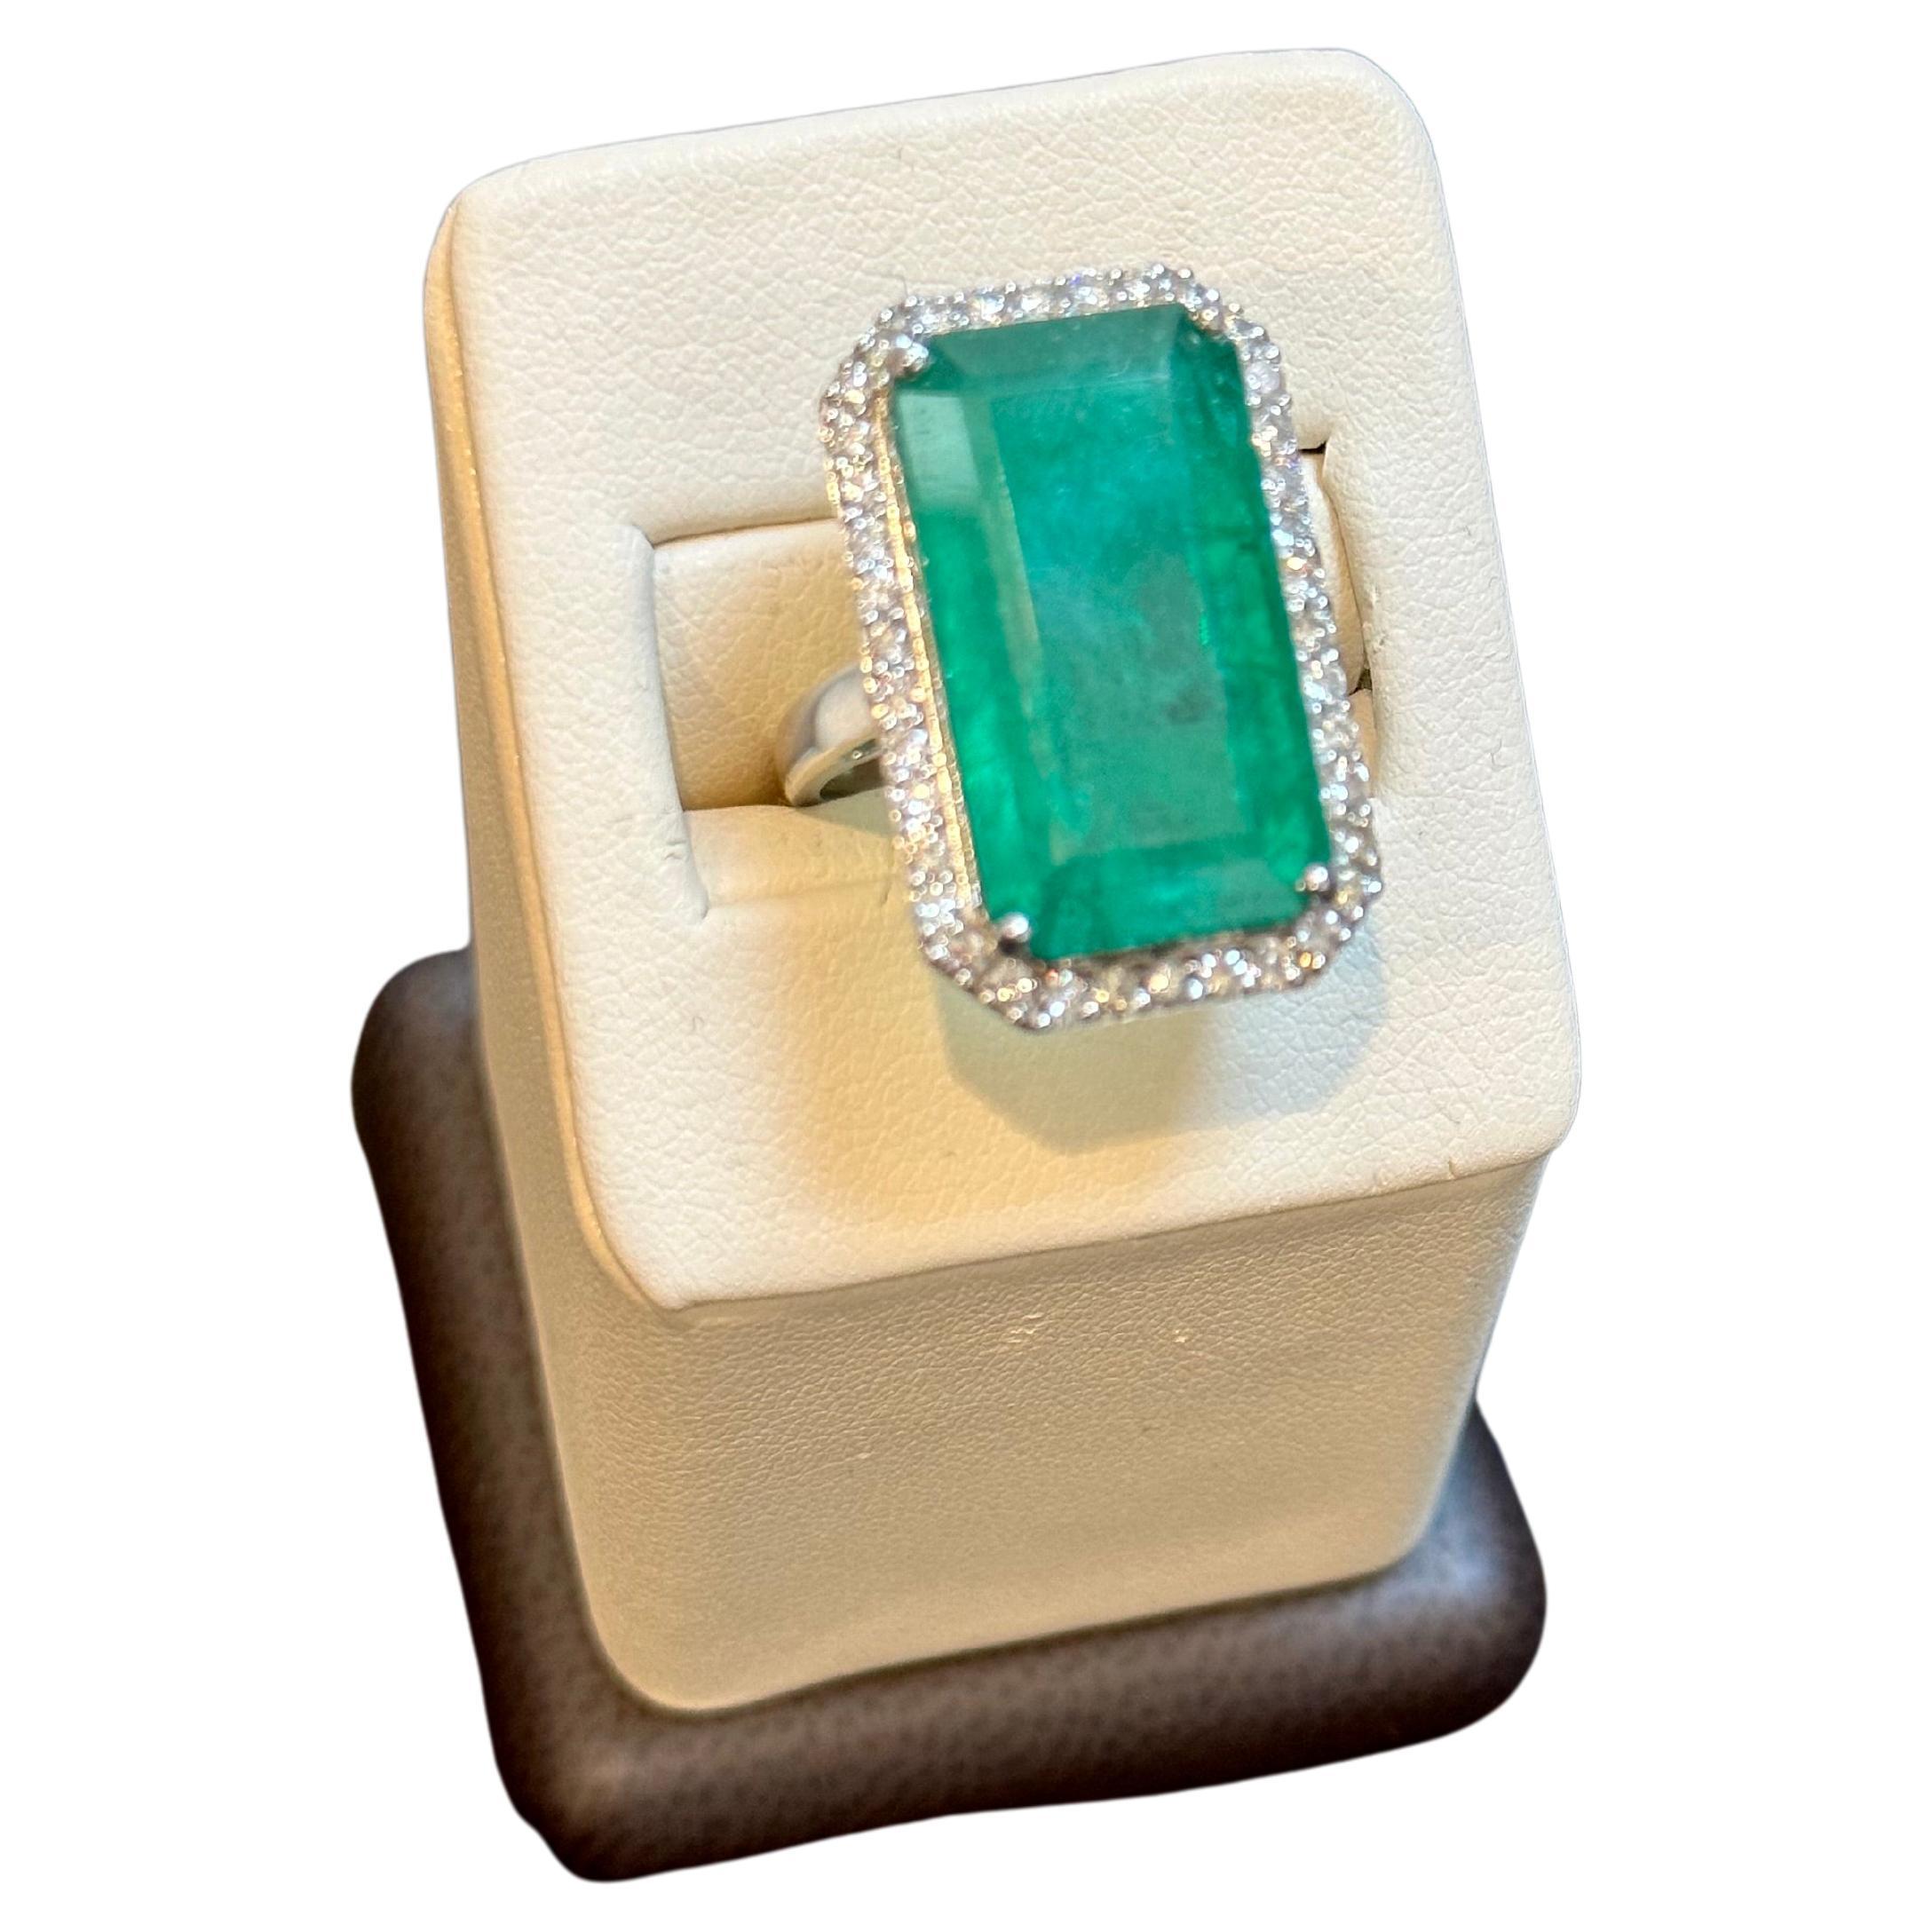 Natural 16 Carat Emerald Cut Zambian Emerald & Diamond Ring in 14Kt  White Gold
A classic design  ring , Ring Size 6.75
Exact 16 Carat  Emerald Cut Emerald Absolutely gorgeous emerald , Very desirable color .
Origin Zambia
14 Karat white gold   9 gm